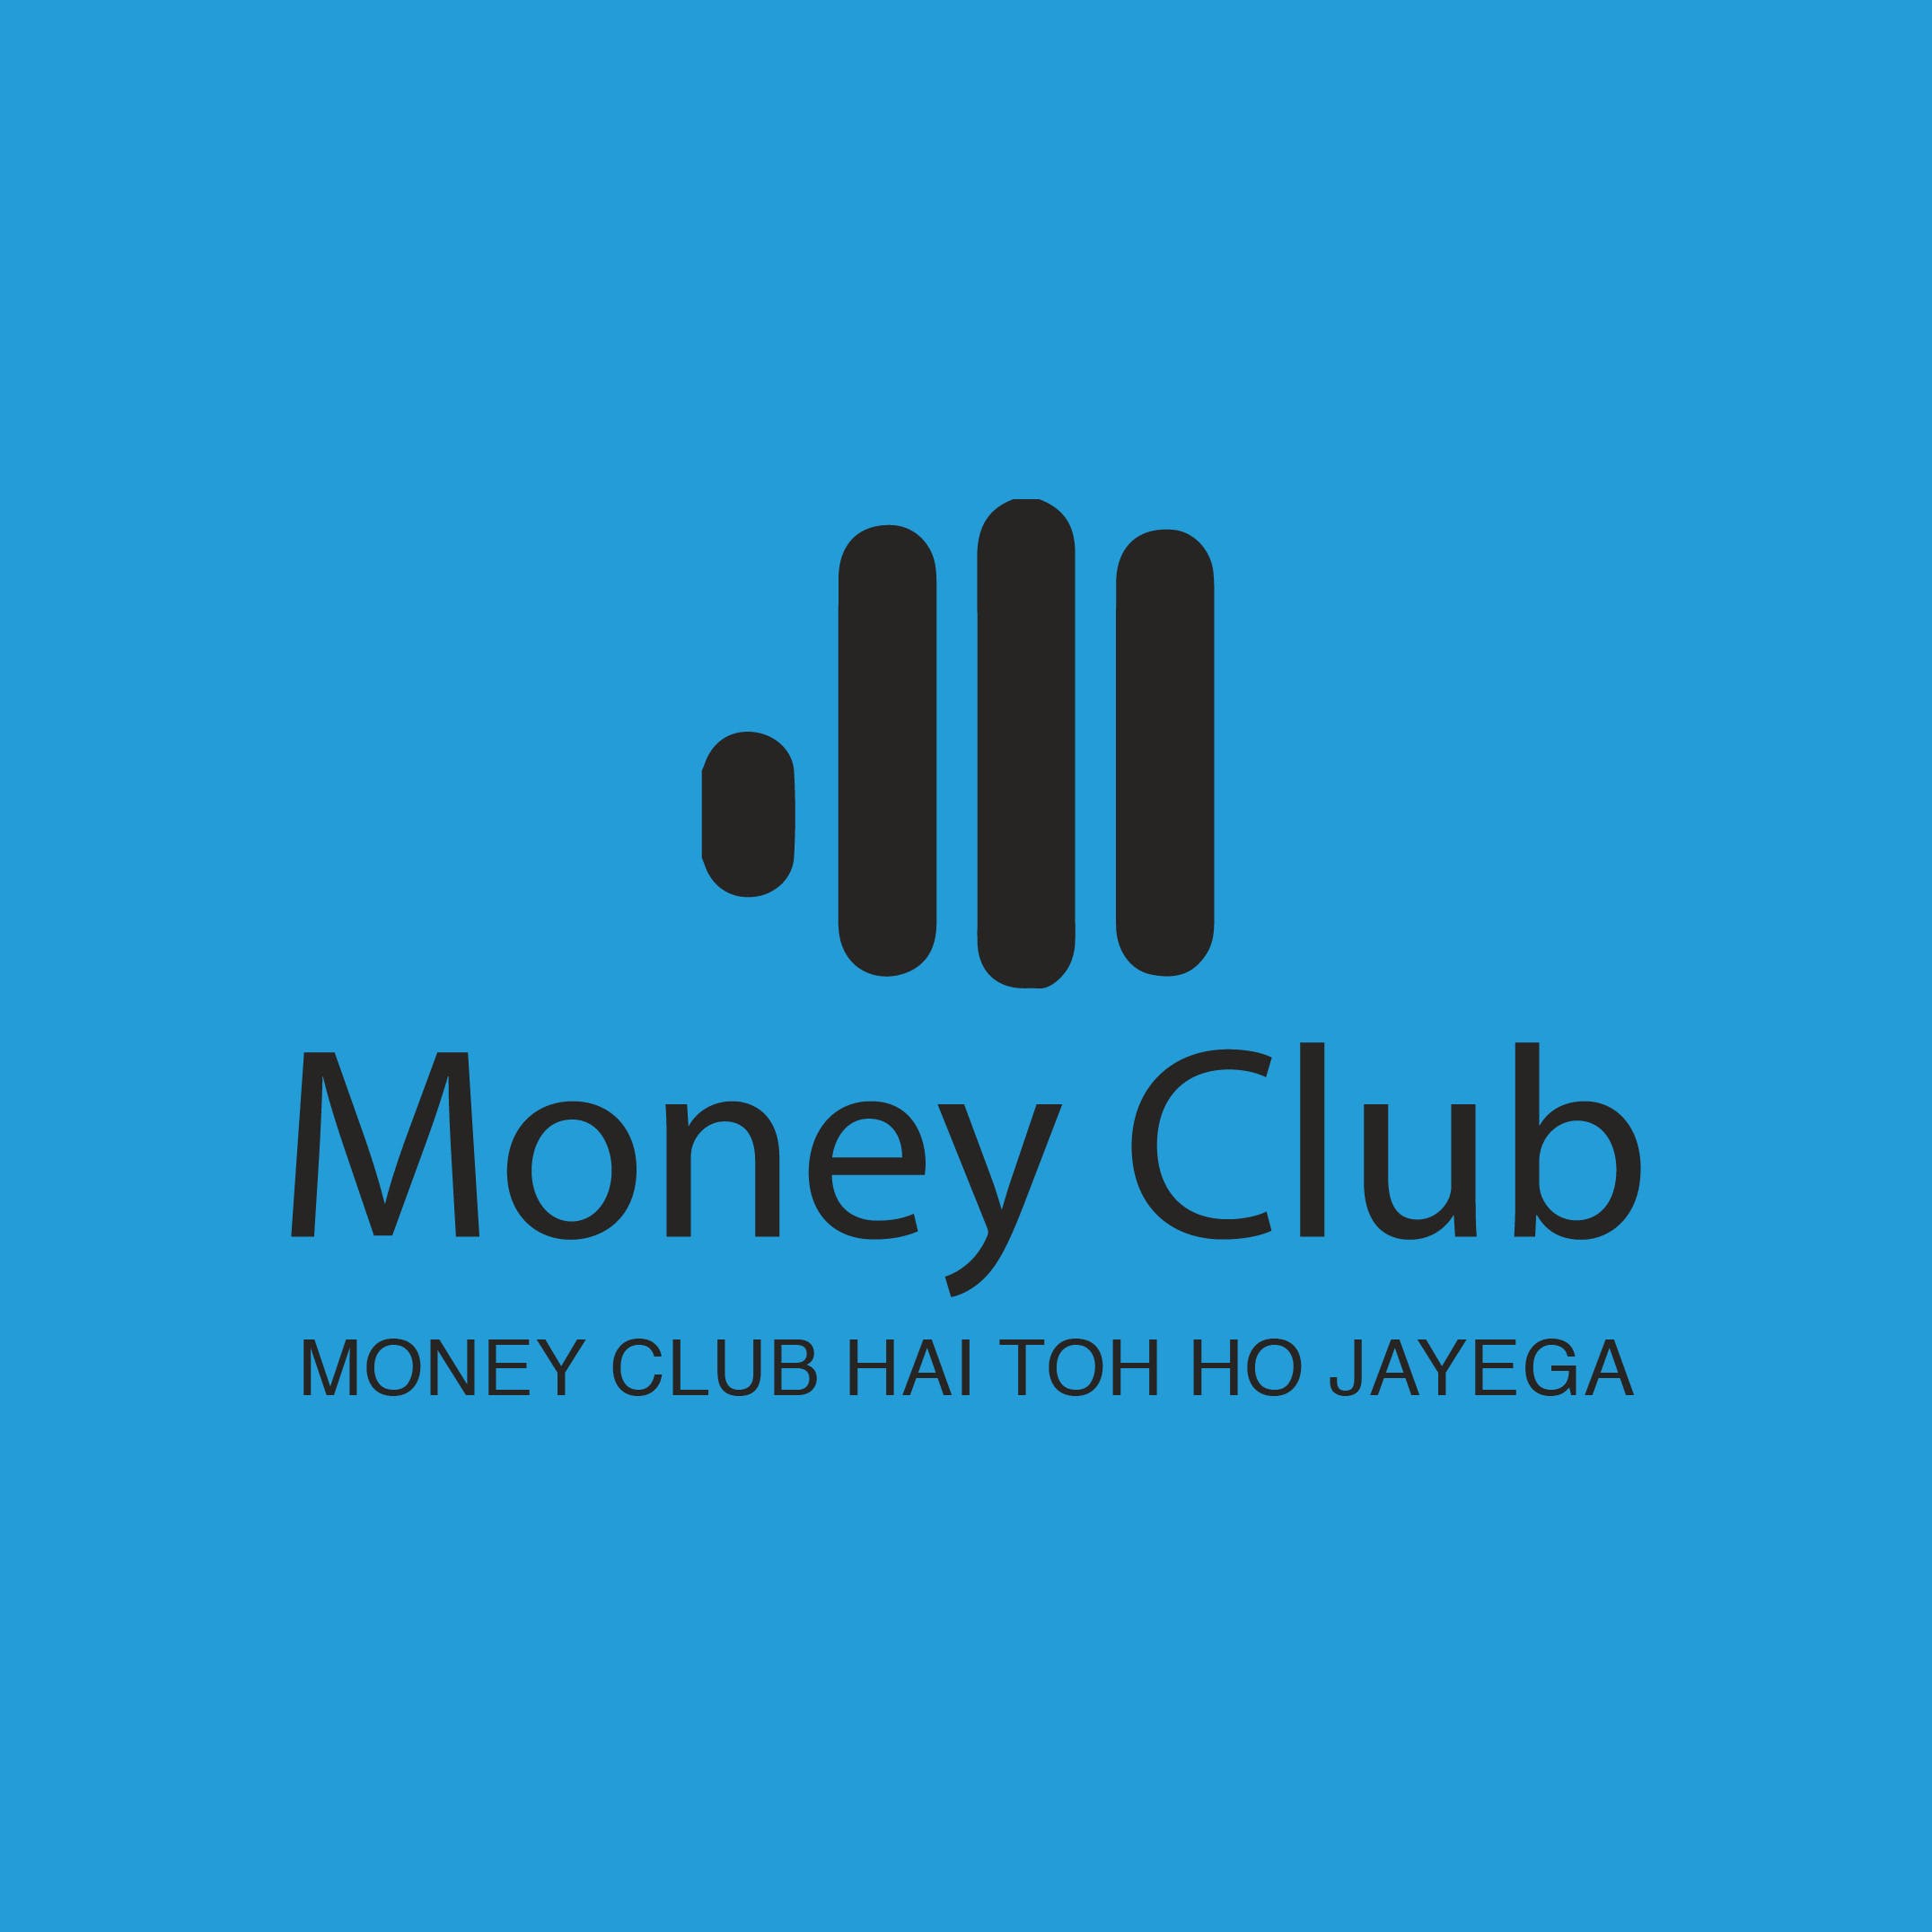 The Money Club media 2